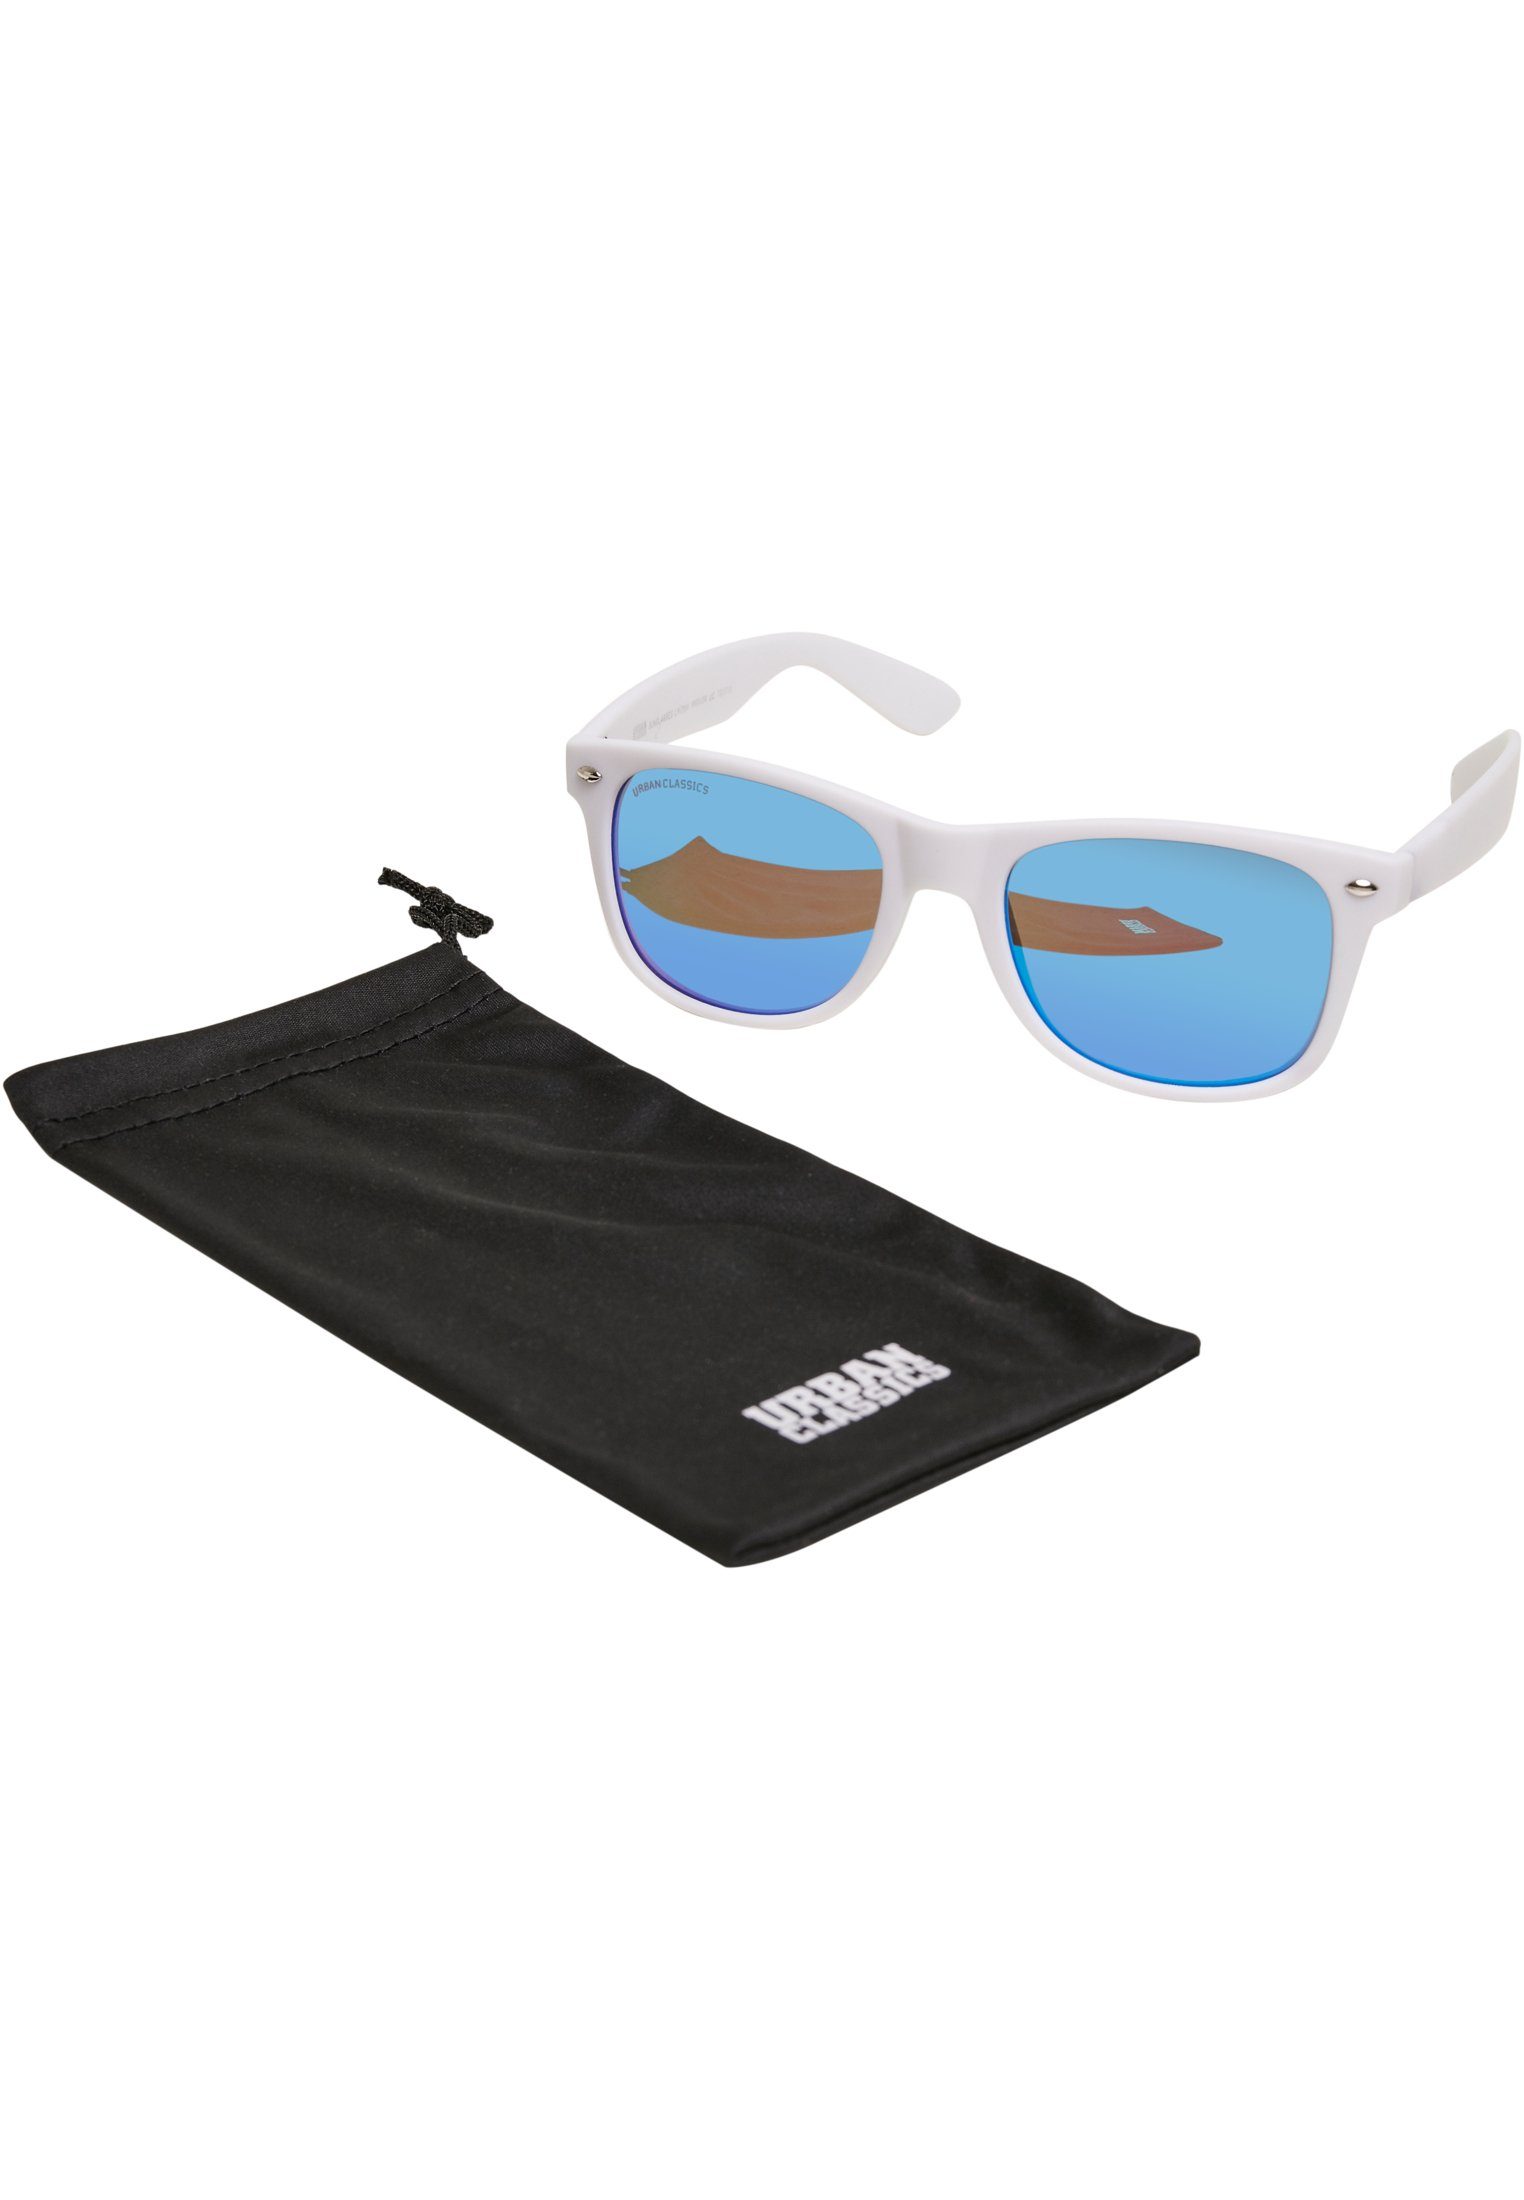 URBAN CLASSICS Sonnenbrille Accessoires white/blue Mirror Sunglasses Likoma UC